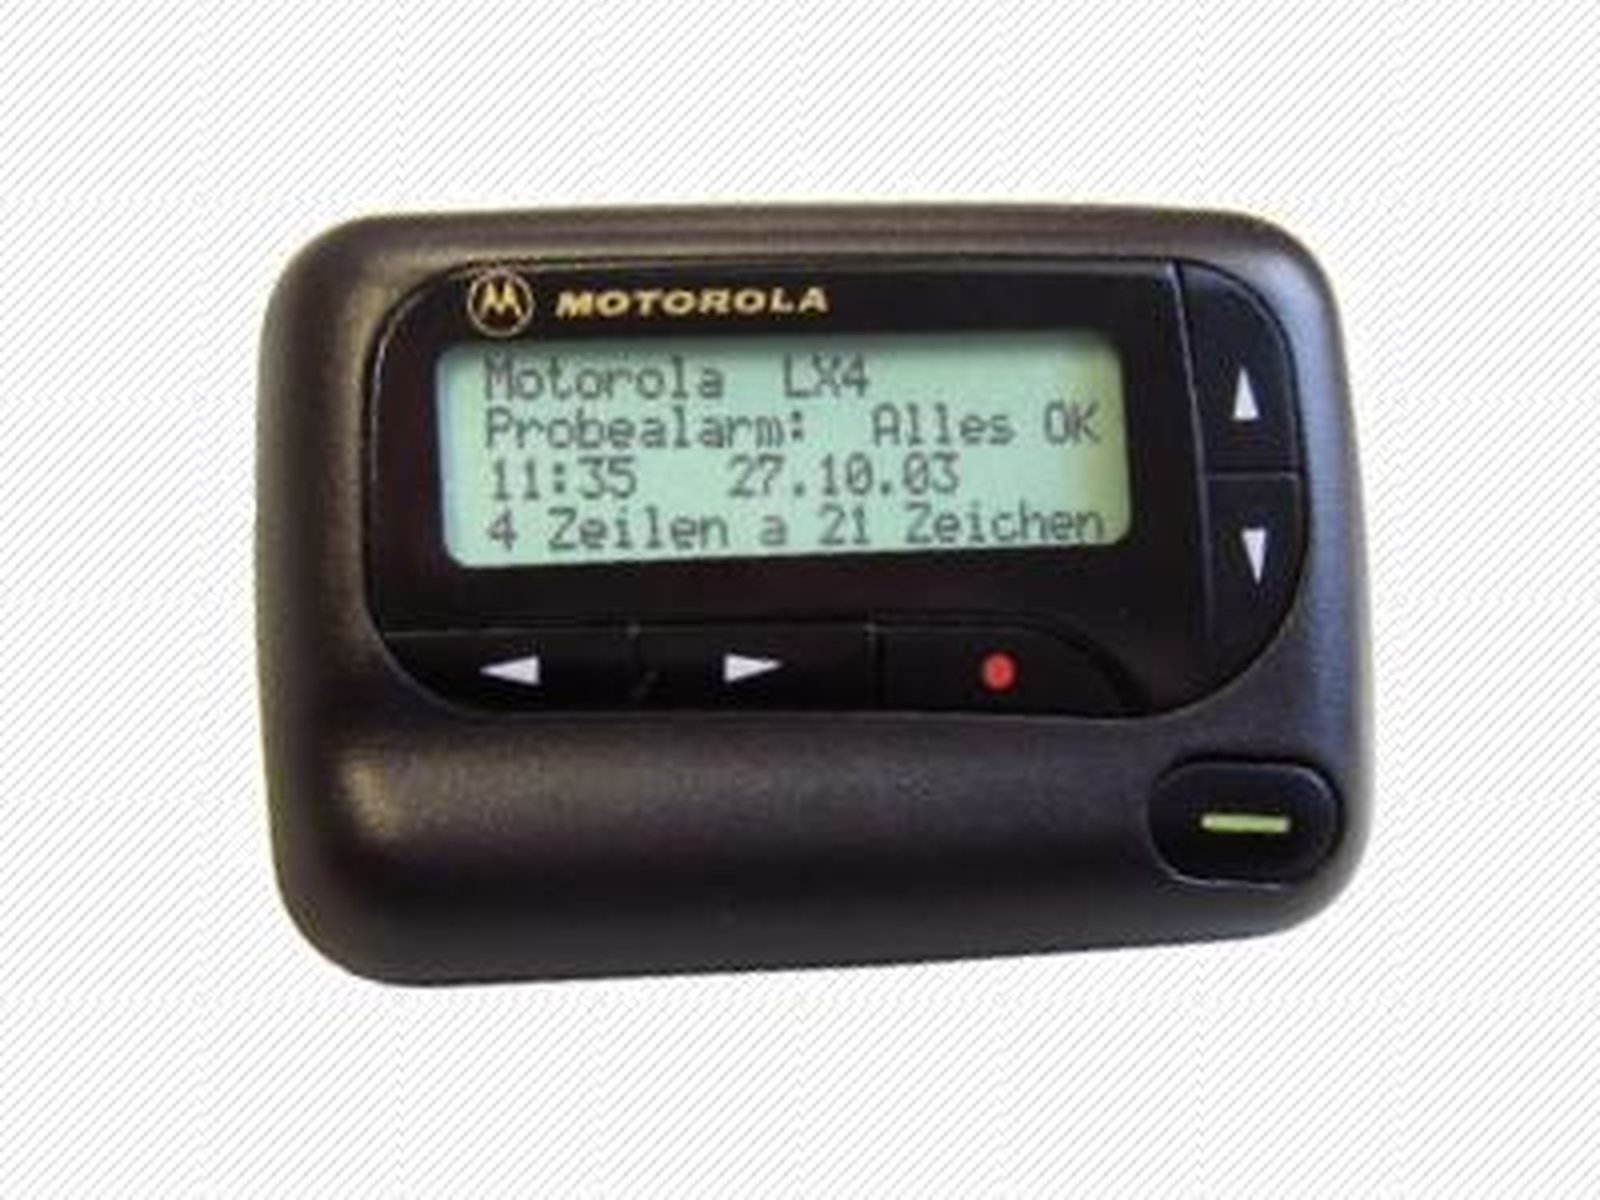 Motorola LX4 advanced